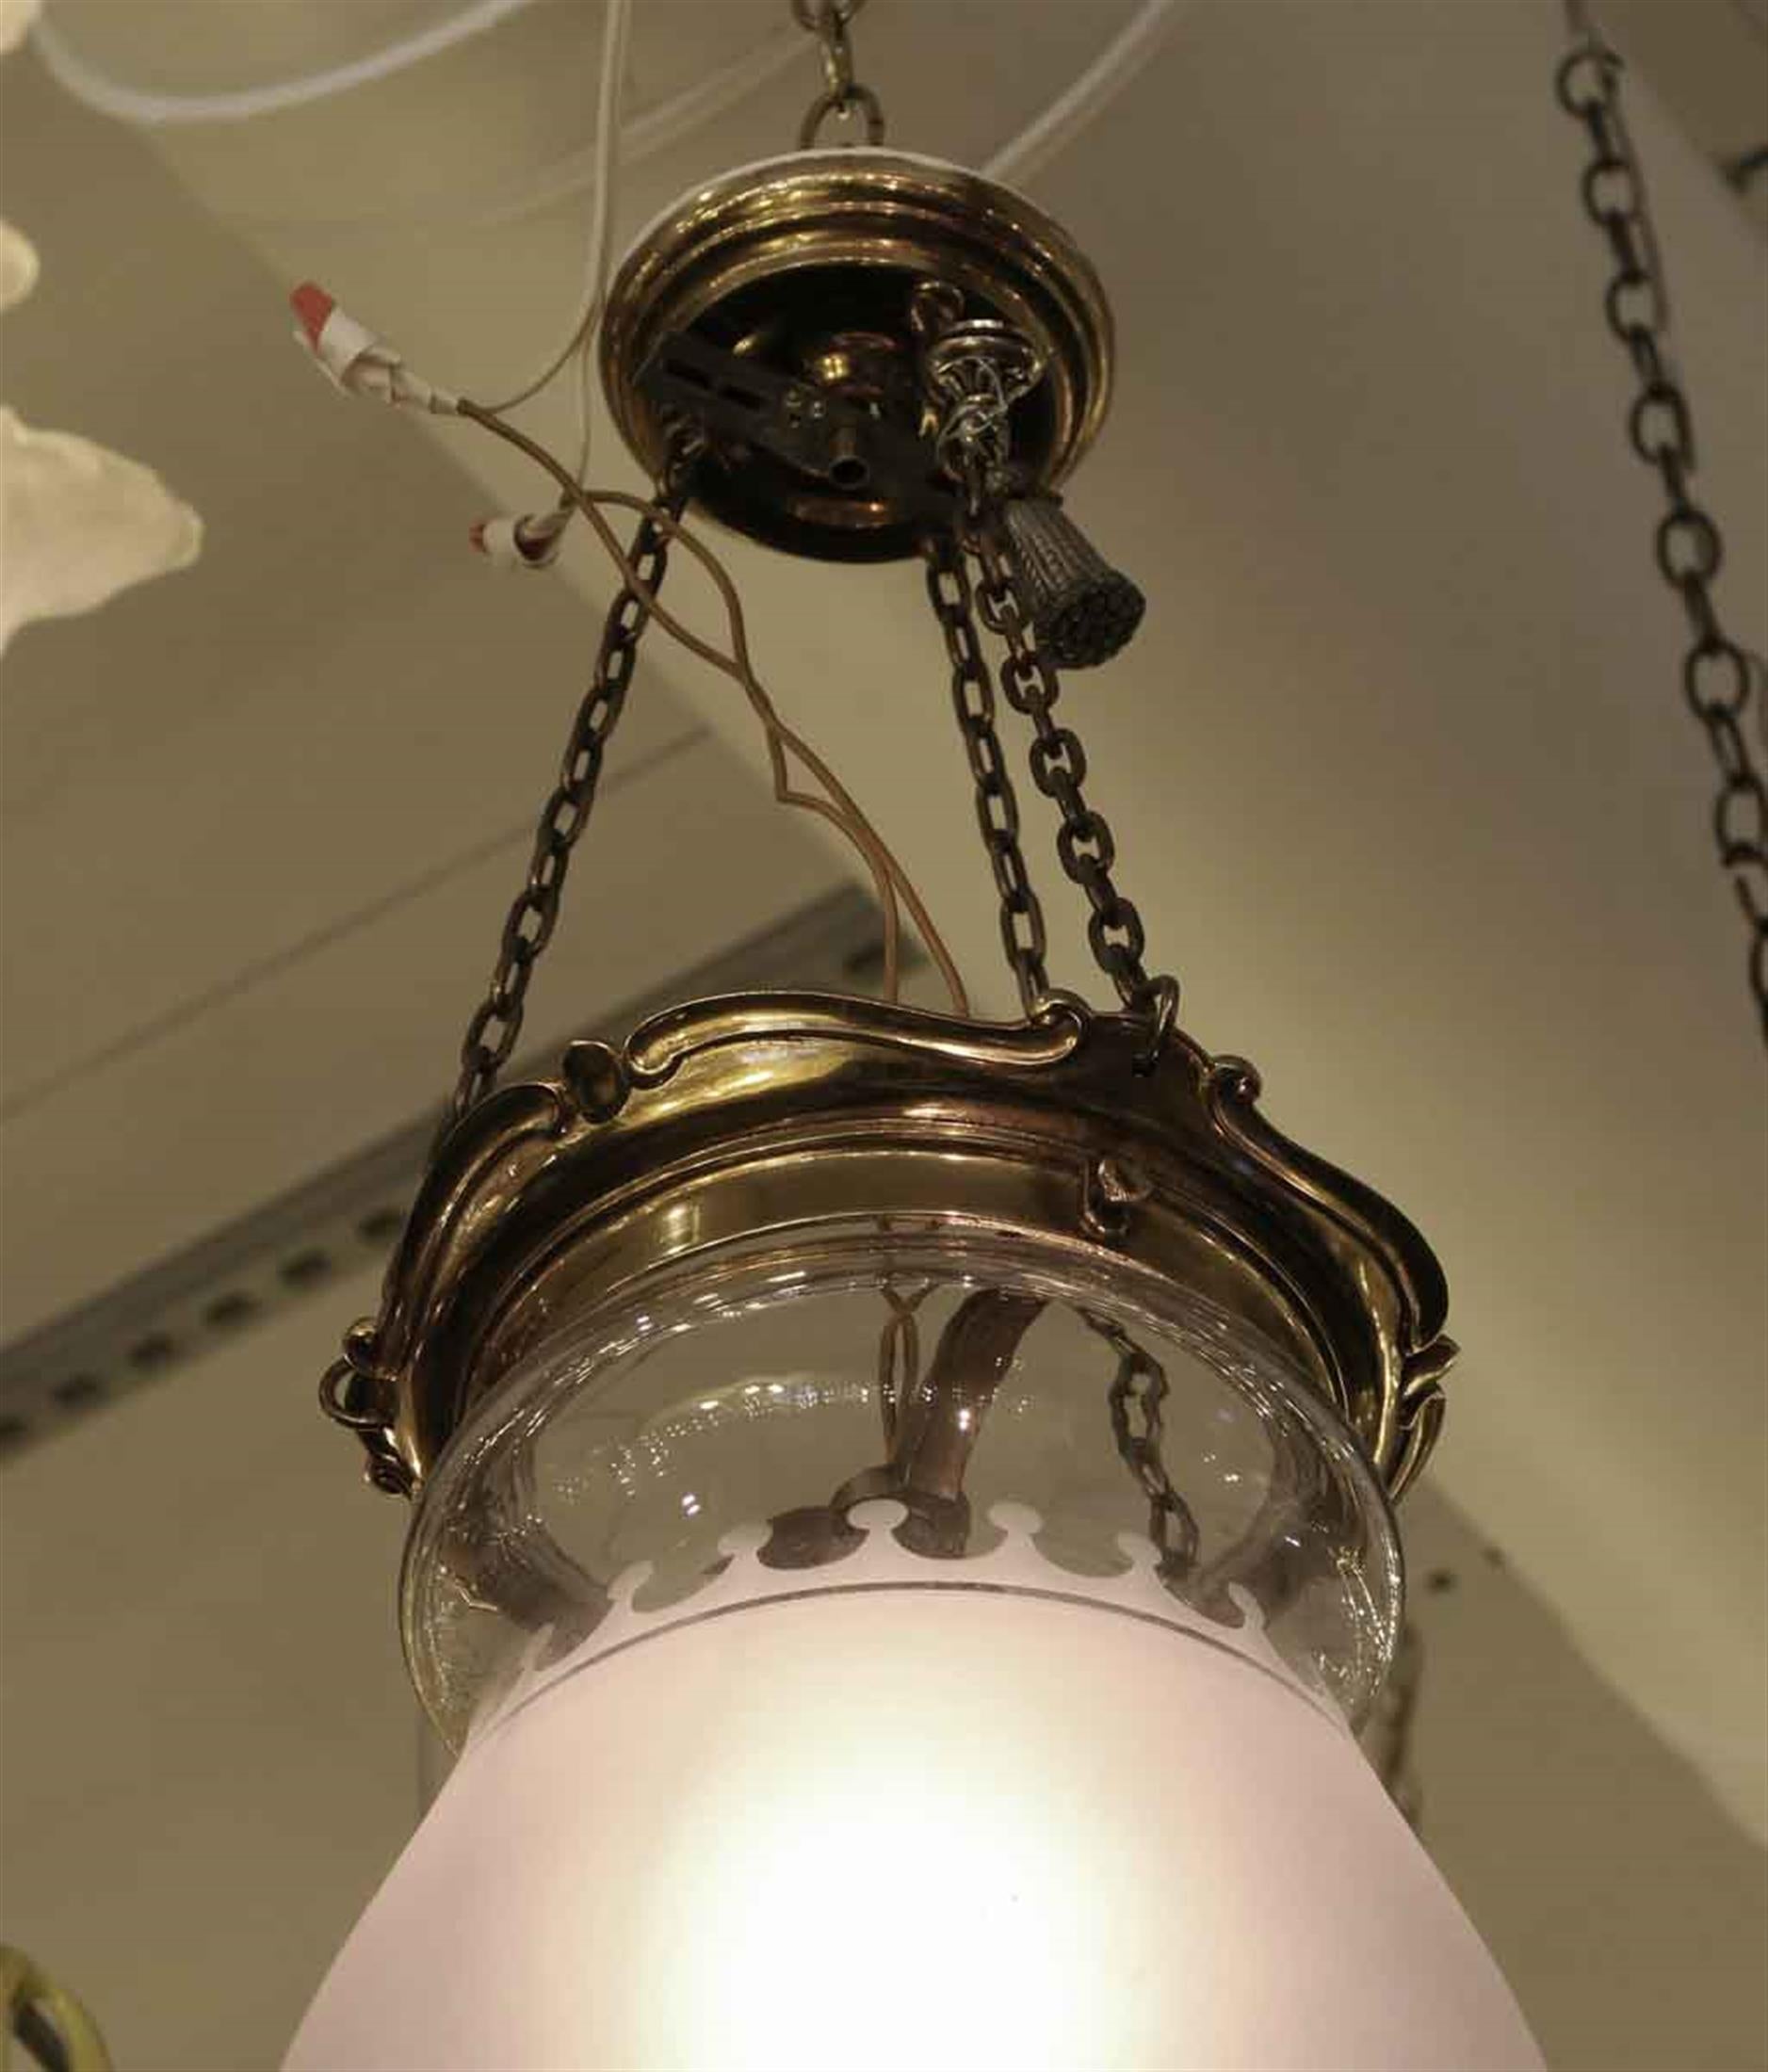  Lampe à suspension en forme de cloche de l'hôtel Waldorf Astoria EF Caldwell  Bon état - En vente à New York, NY